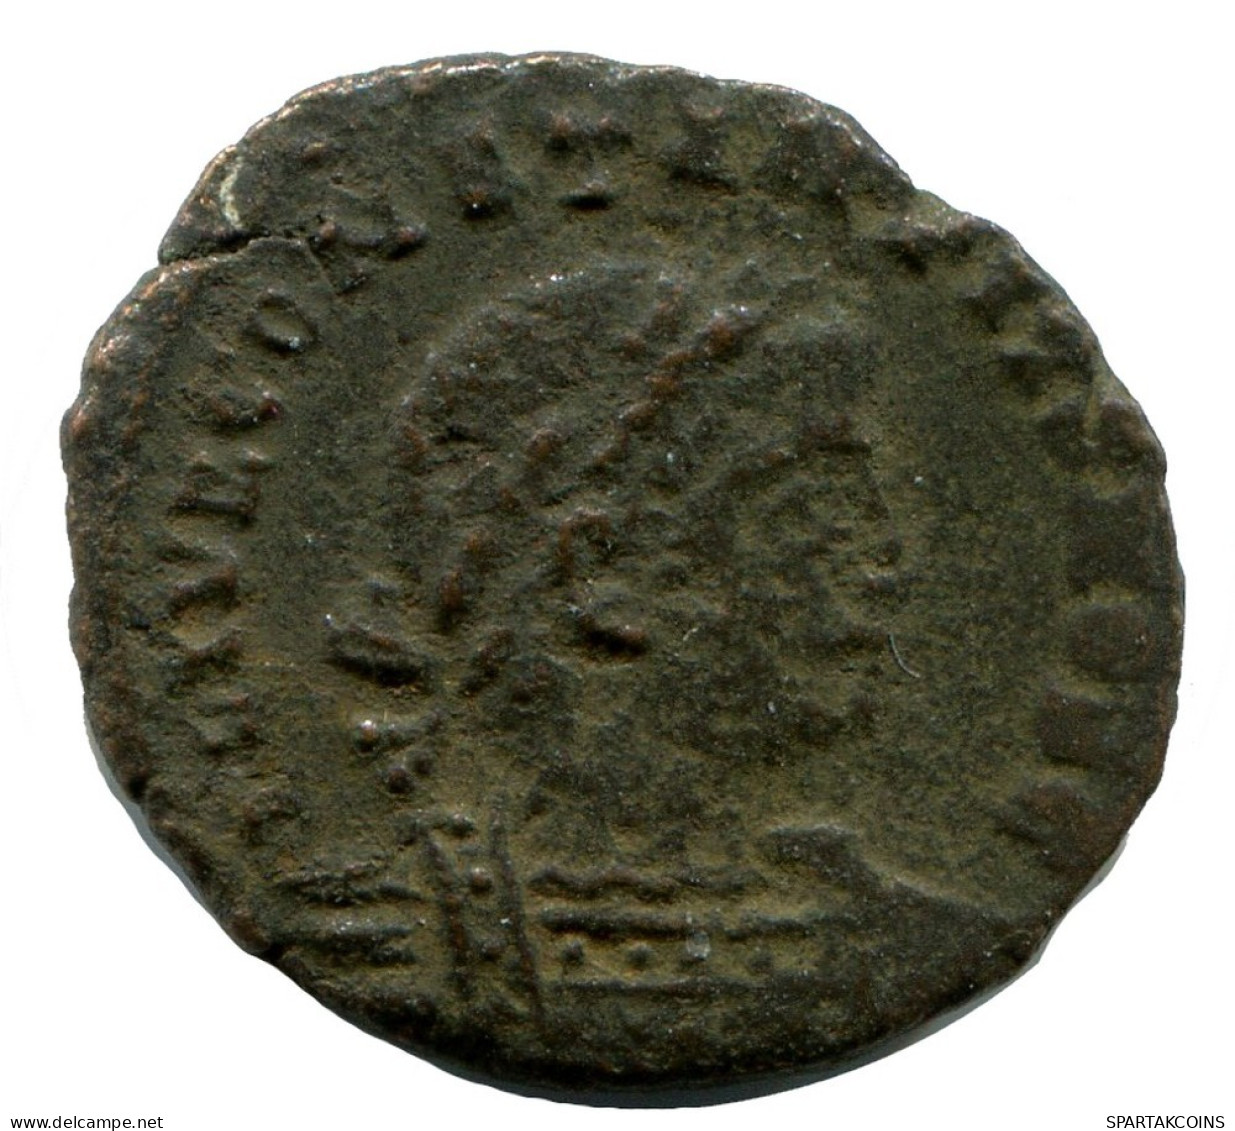 CONSTANTIUS II ALEKSANDRIA FROM THE ROYAL ONTARIO MUSEUM #ANC10486.14.E.A - El Imperio Christiano (307 / 363)